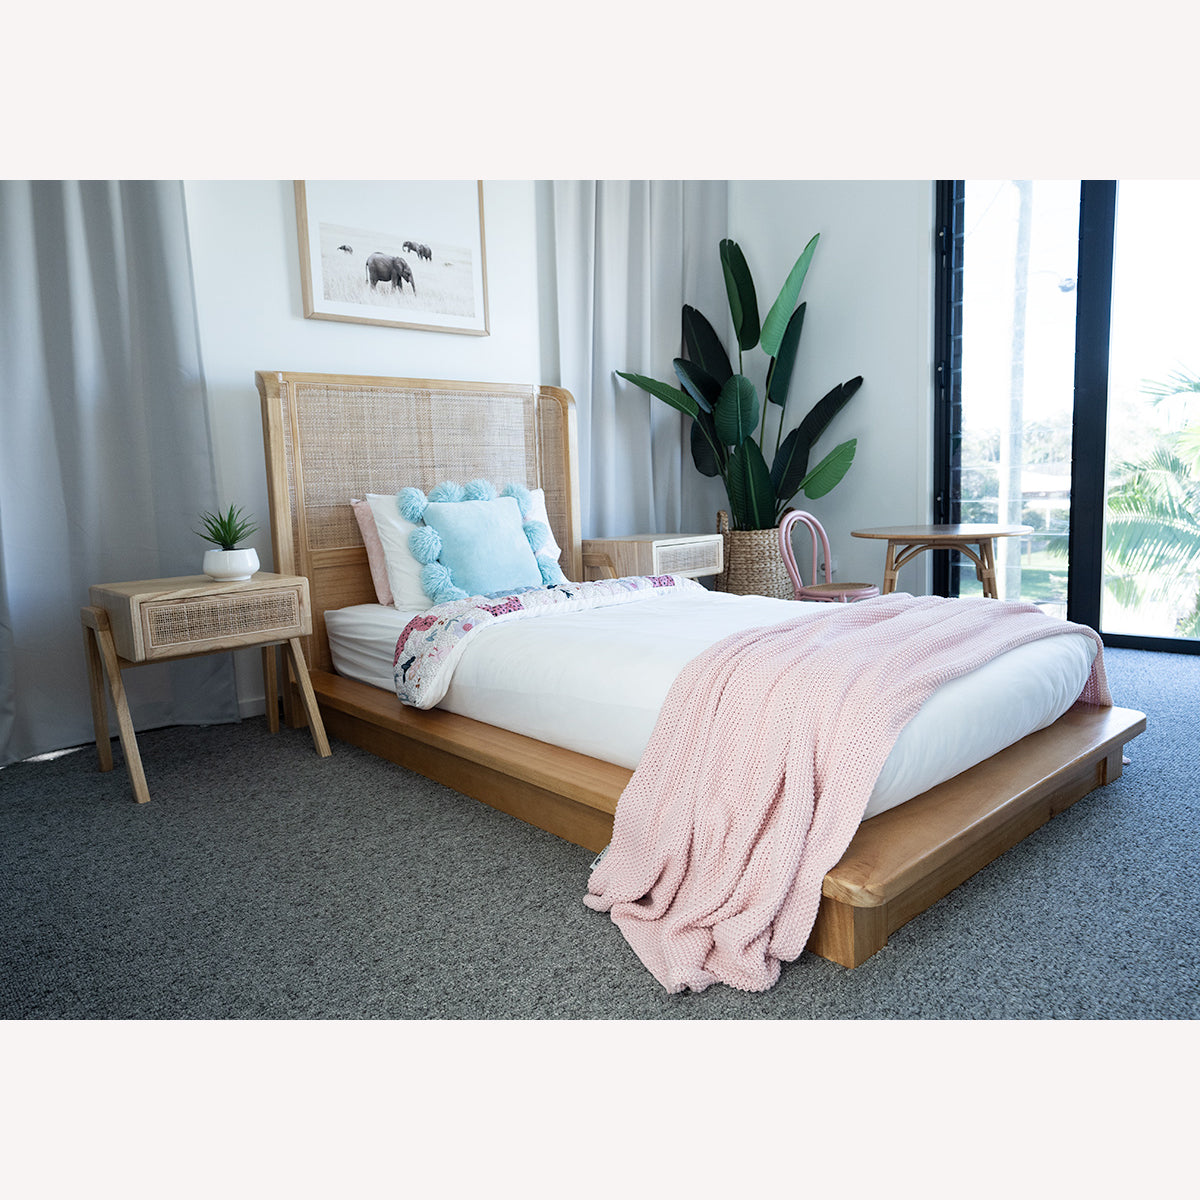 Malakai Timber and Rattan Bed - Single Size - Notbrand(2)